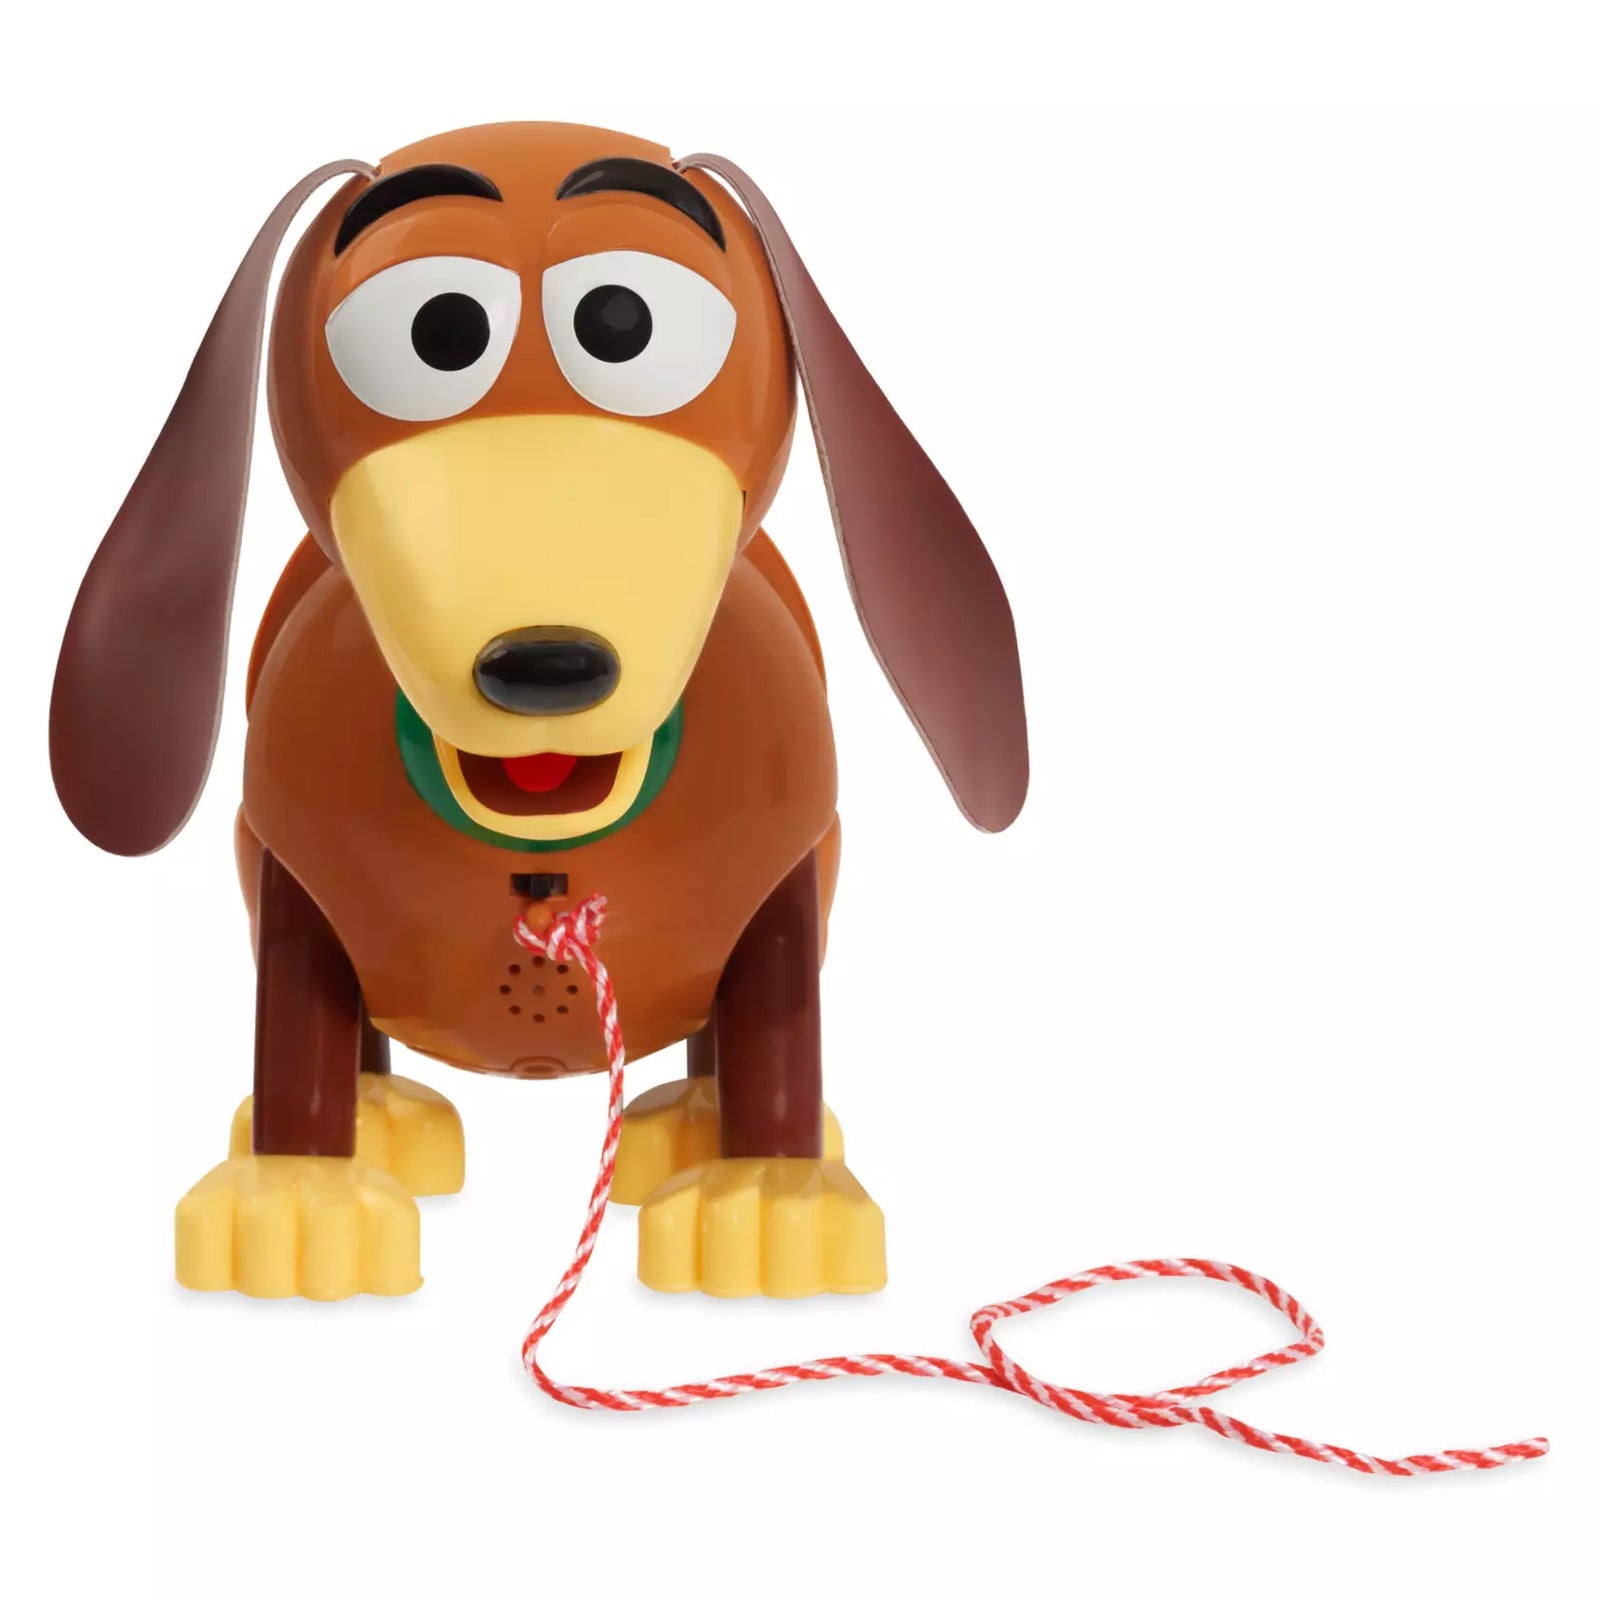 Toy Story Talking Action Figure - Slinky Dog